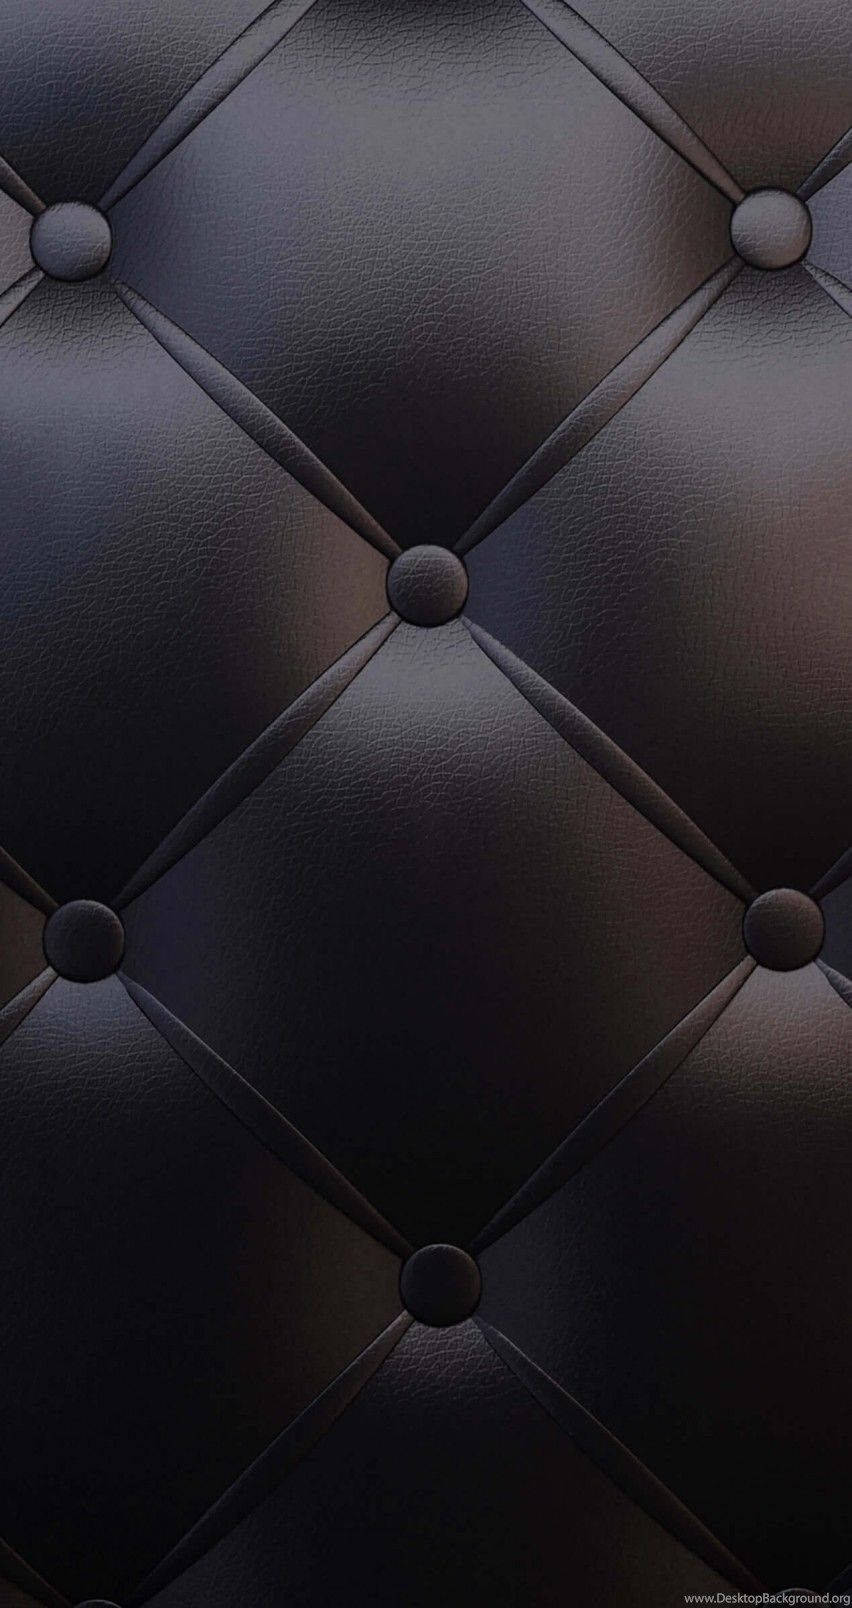 Caption: Black Leather Diamond Pattern iPhone Wallpaper Wallpaper